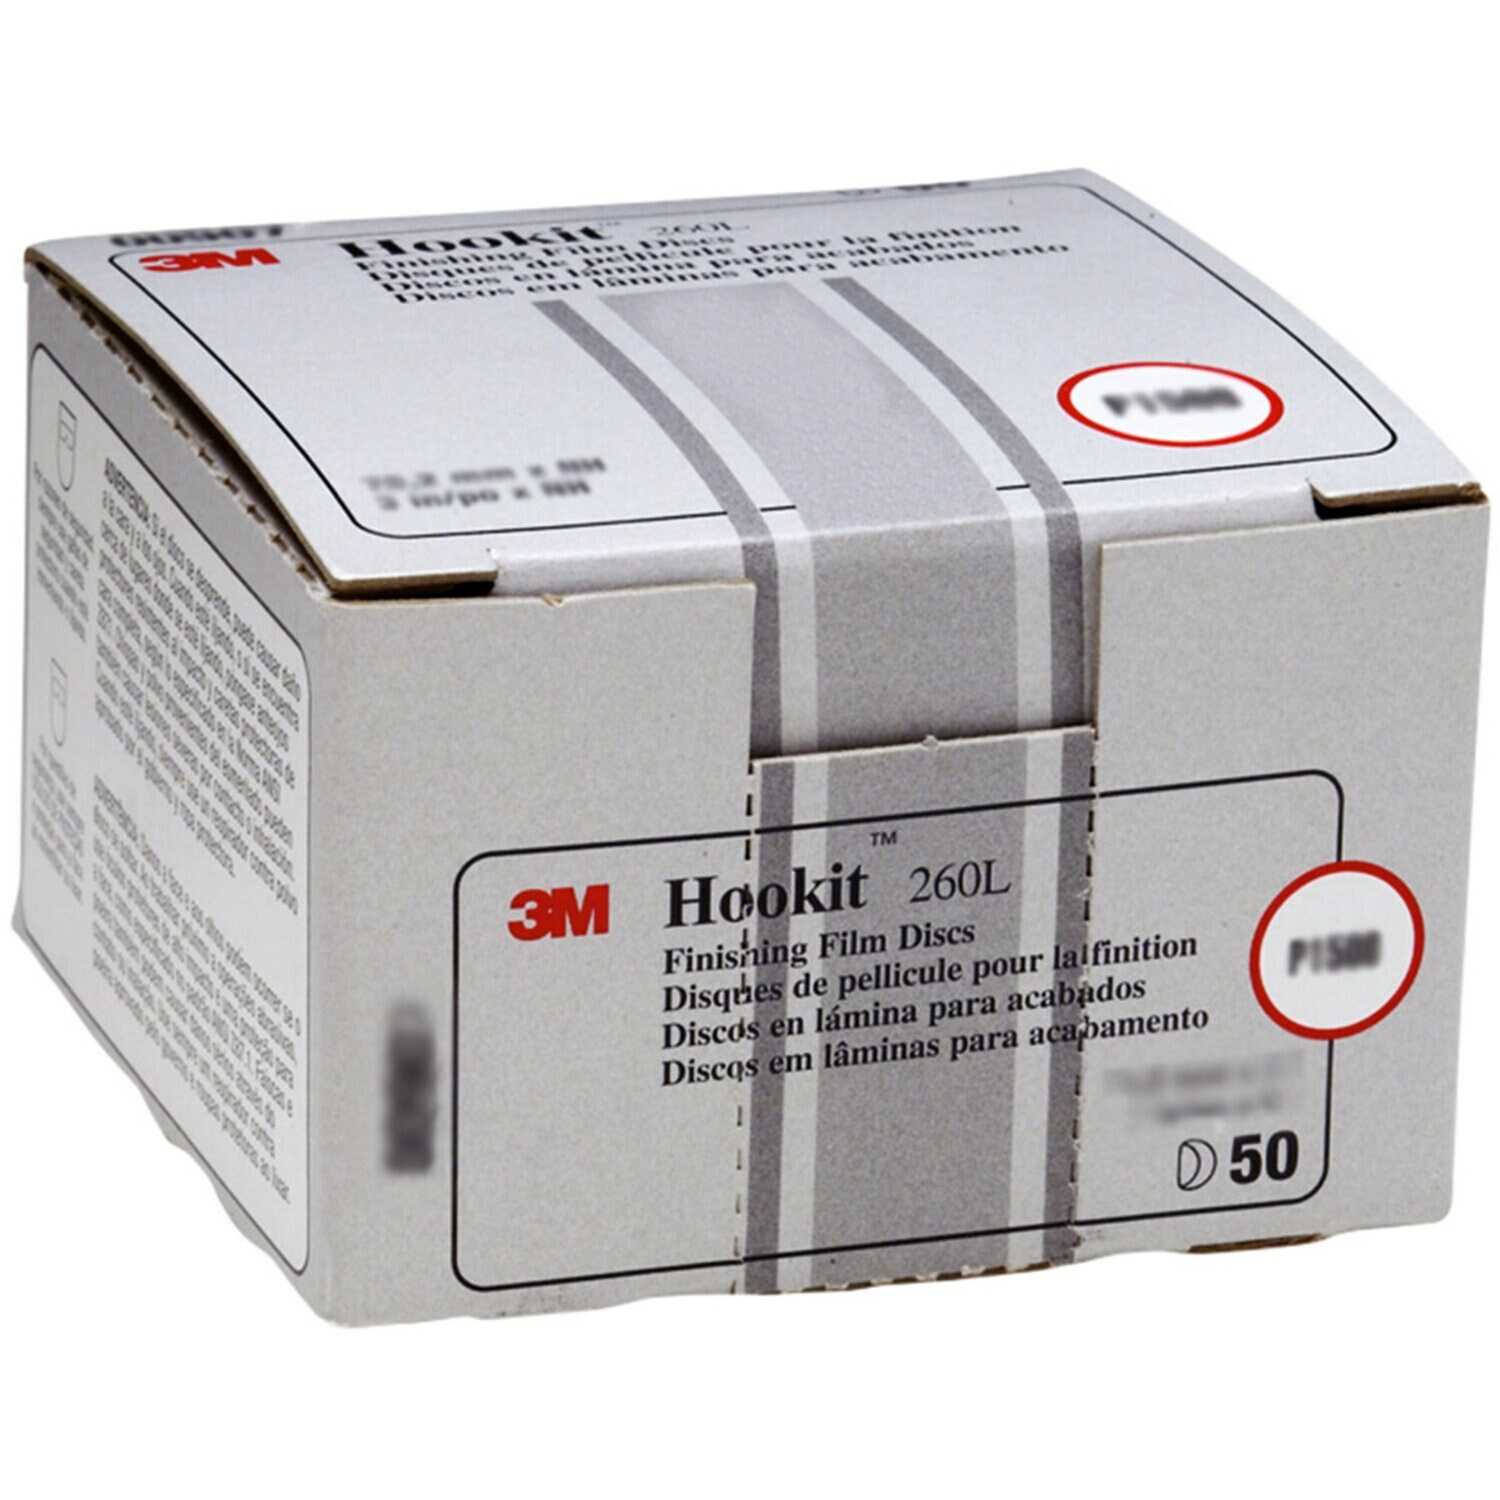 7000000561 - 3M Hookit Finishing Film Abrasive Disc 260L, 00908, 3 in, P1200, 50
discs per carton, 4 cartons per case